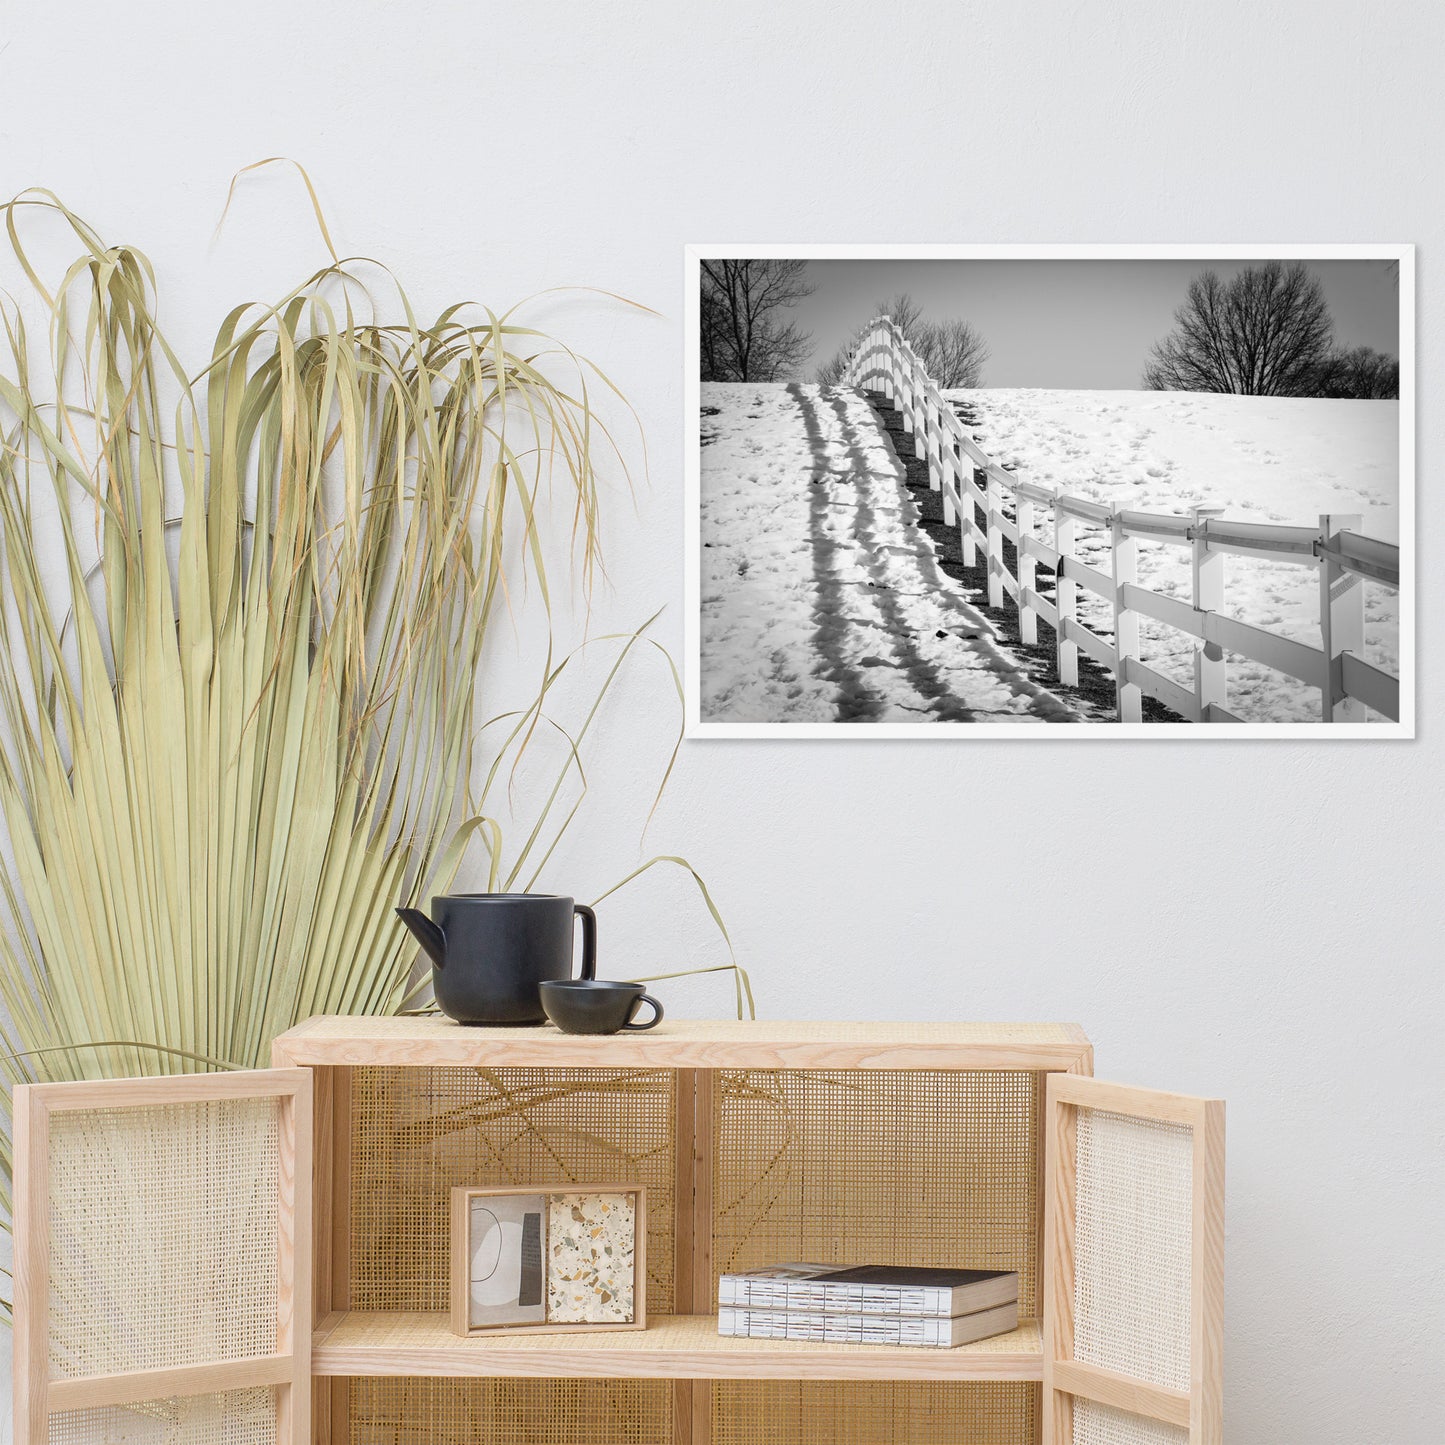 Endless Fences in Black & White Rural Landscape Framed Photo Paper Wall Art Prints